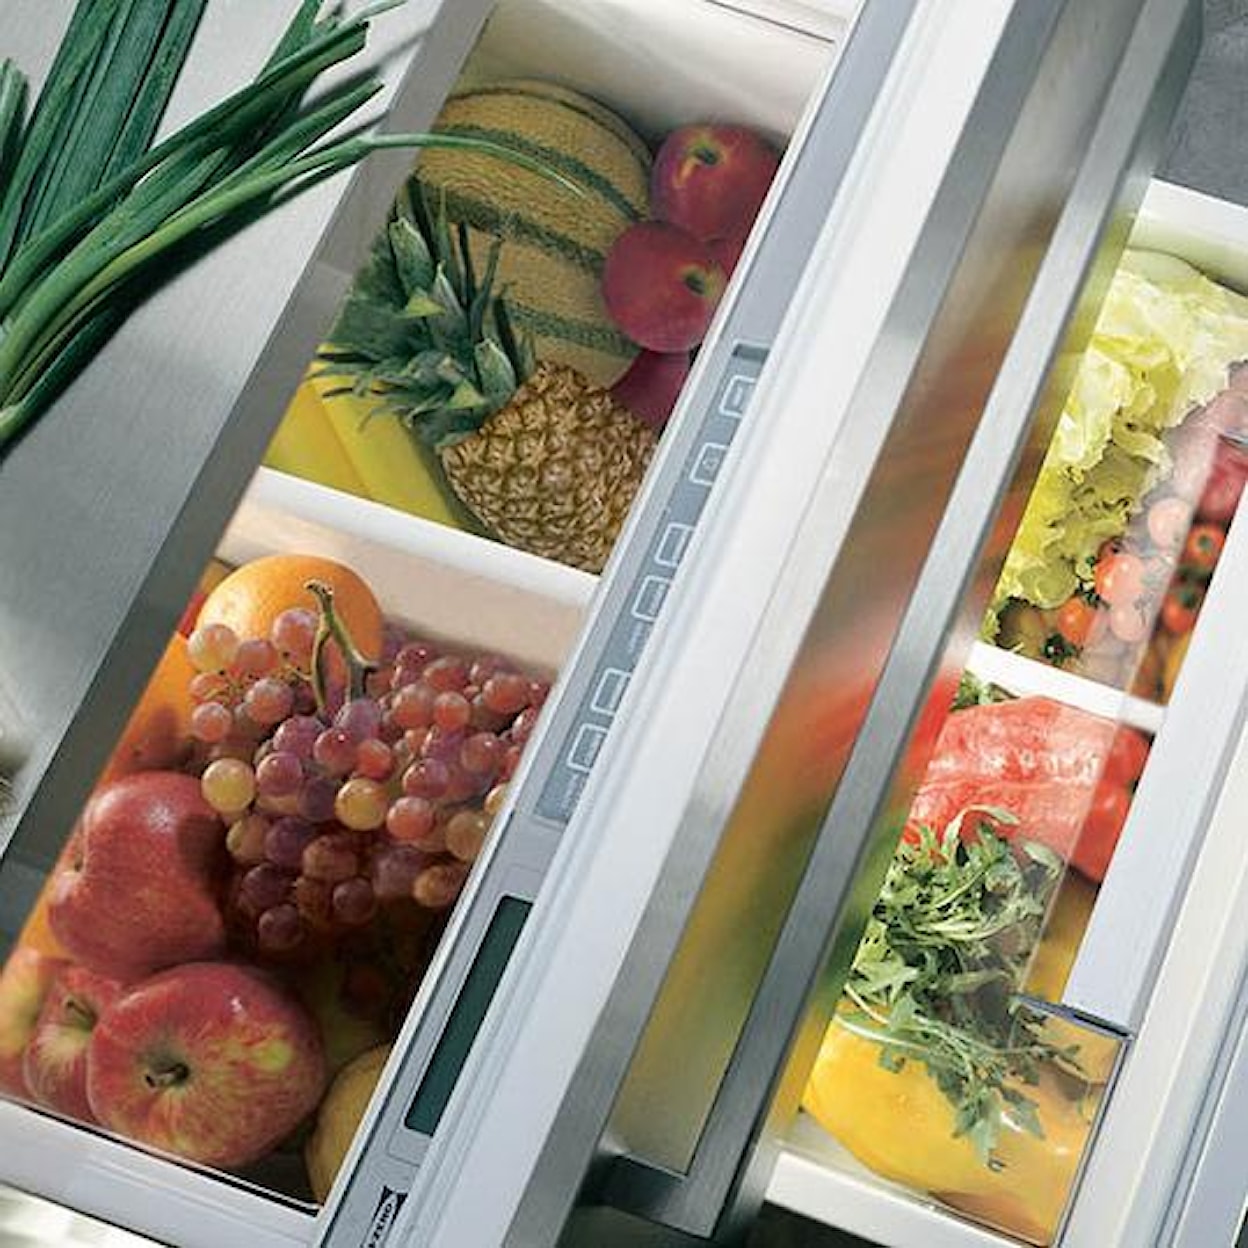 Sub-Zero Undercounter Refrigeration 5.3 Cu. Ft. Integrated Refrigerator Drawers